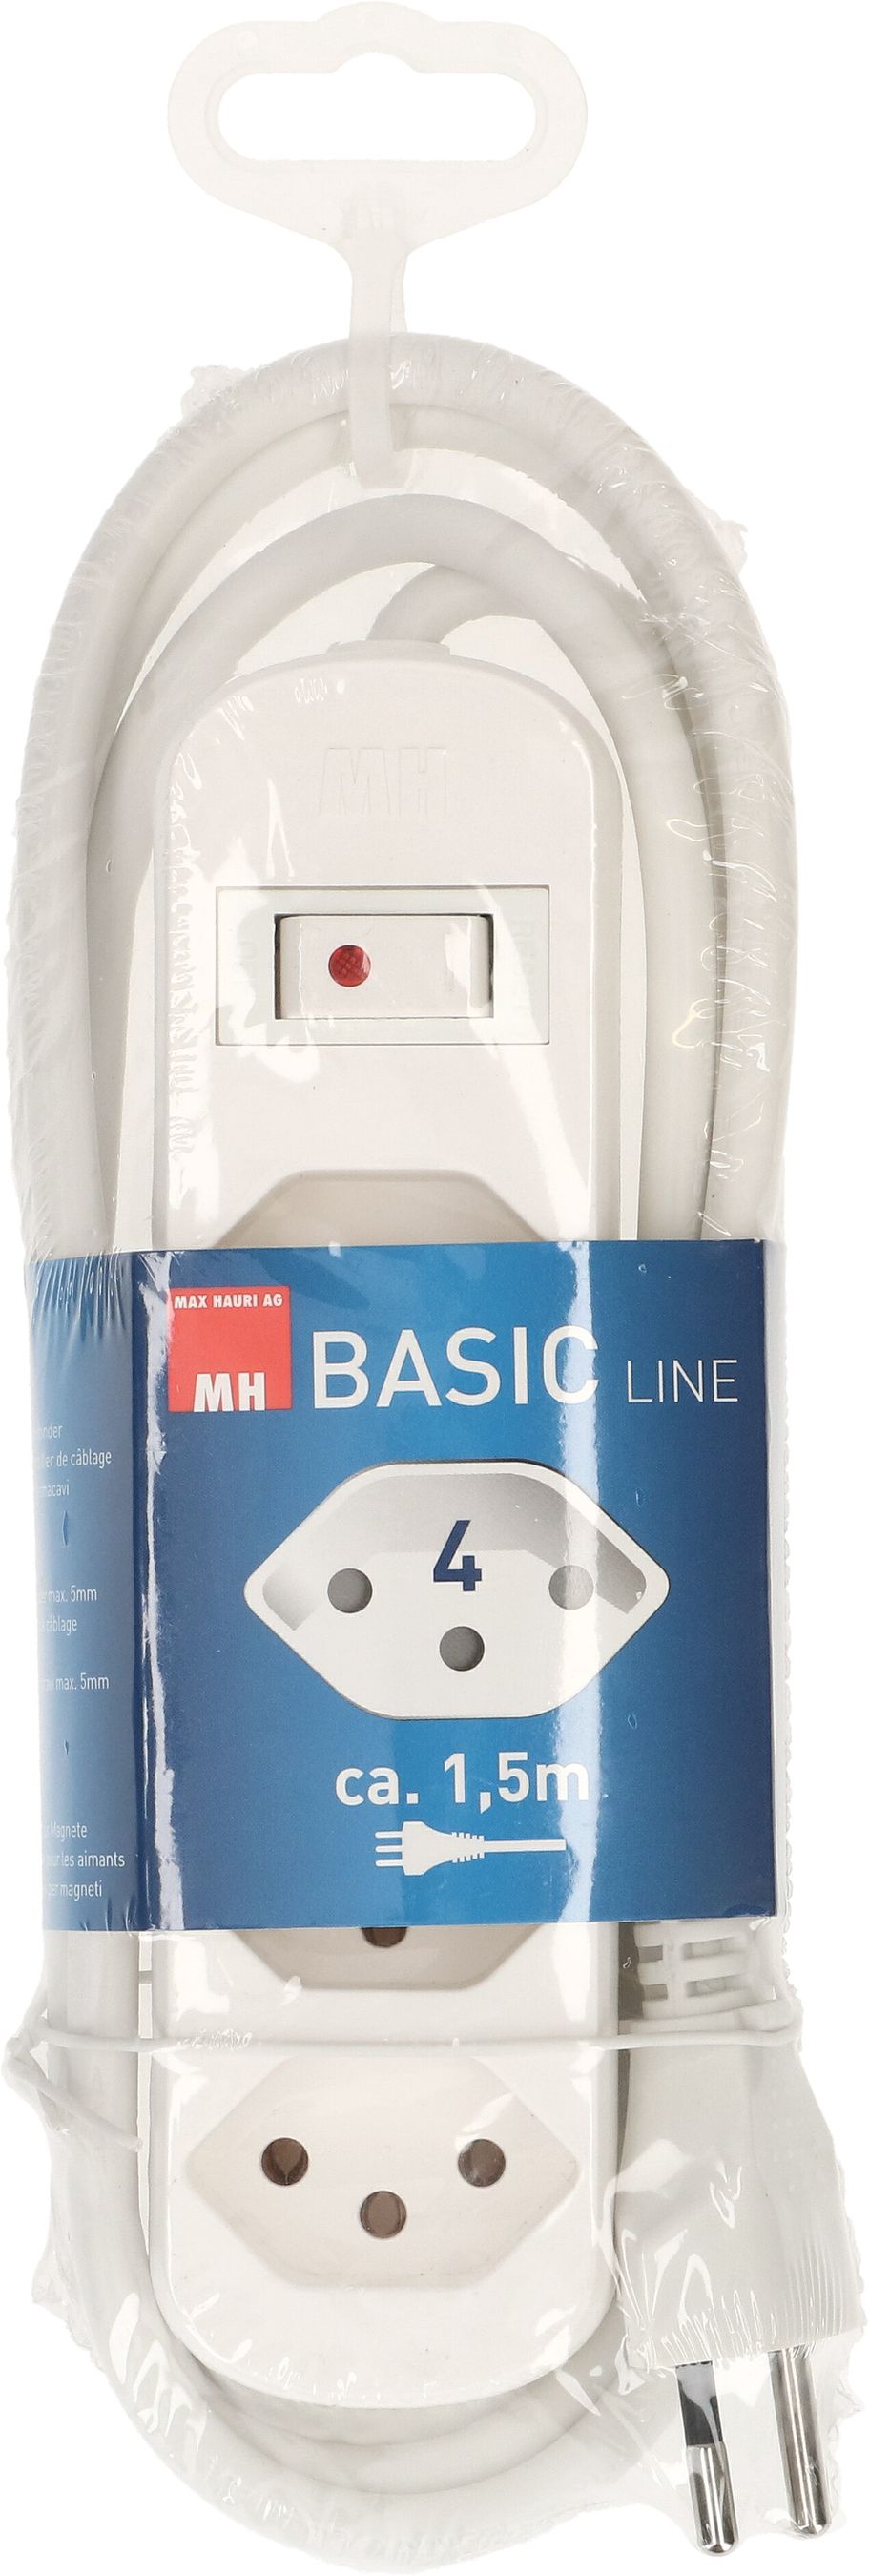 multipresa Basic Line 4x tipo 13 bianco interruttore 1.5m